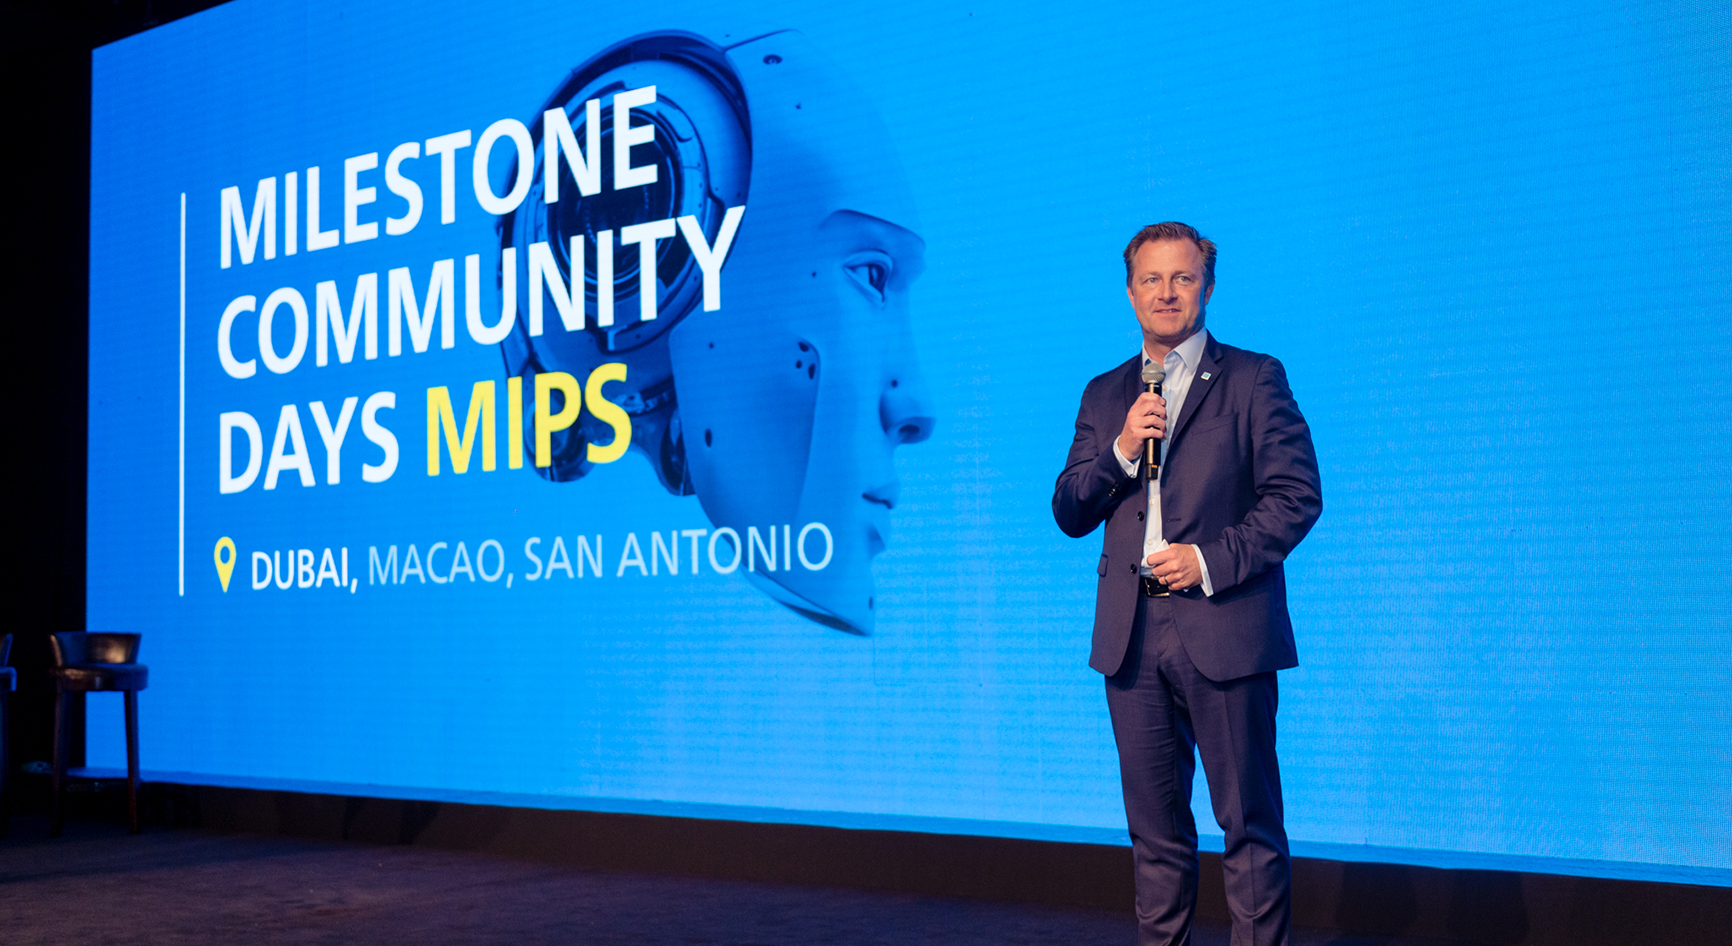 Milestone Systems celebrates Solution Power at Milestone Community Days in Dubai